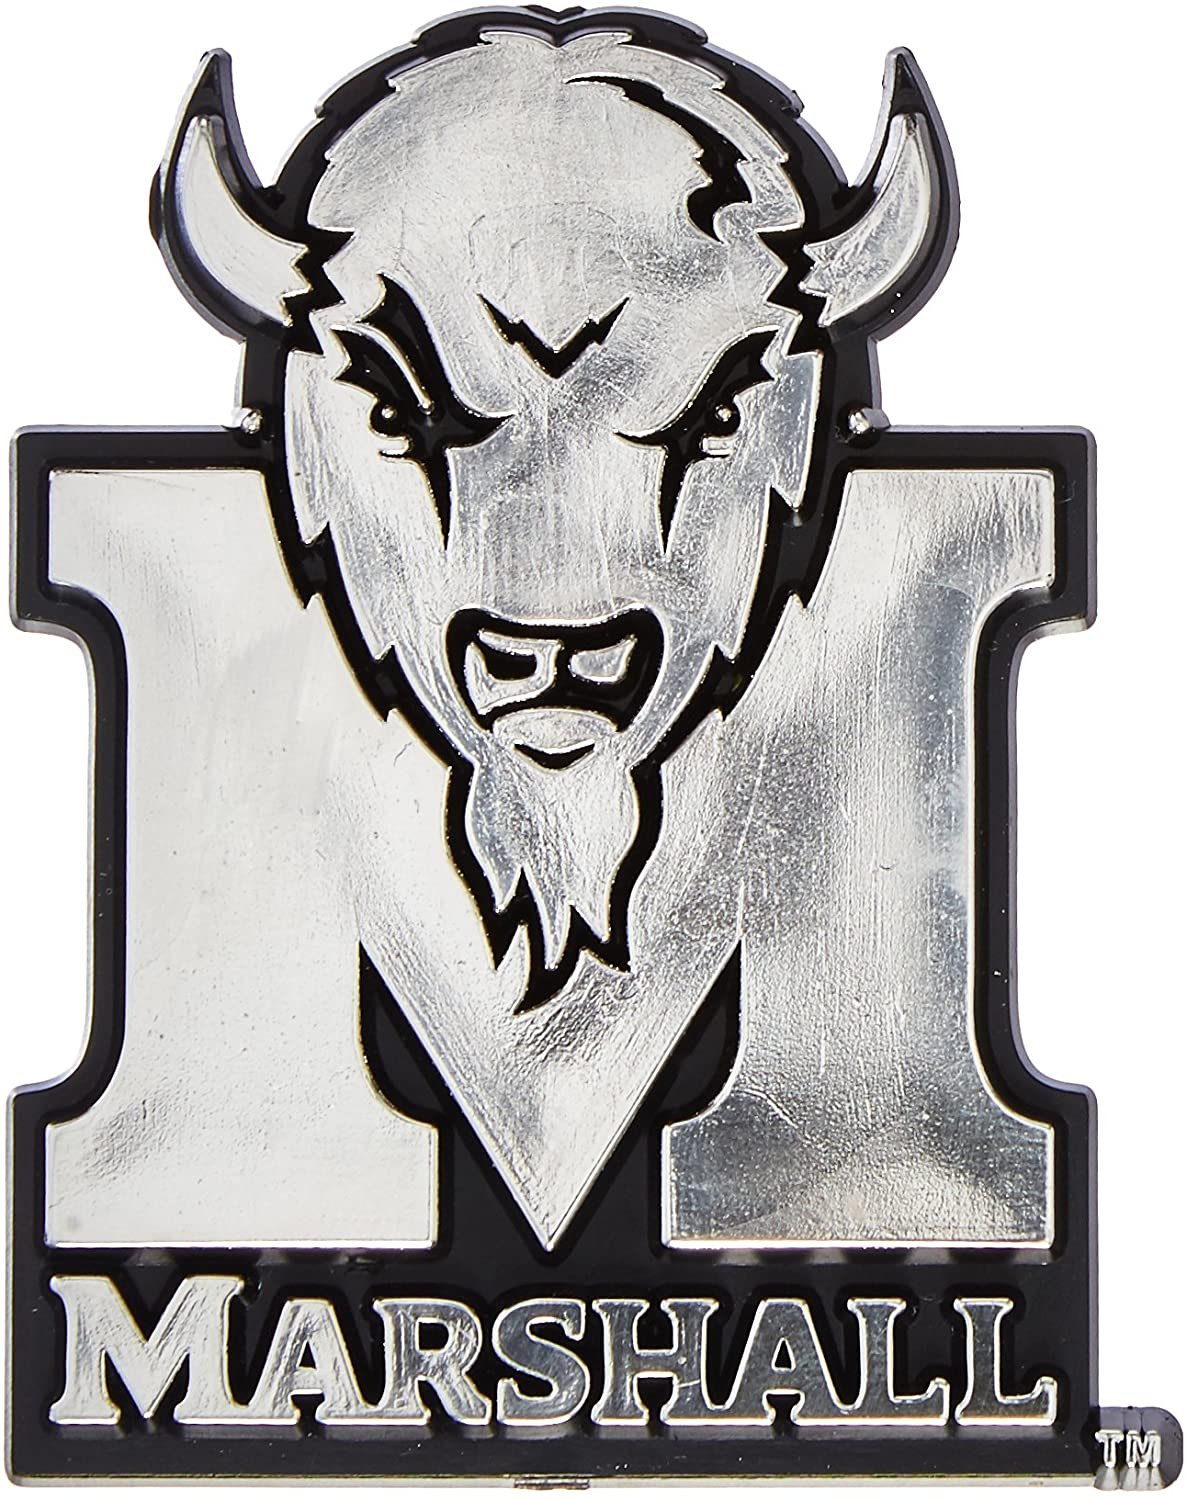 Marshall University Thundering Herd Auto Emblem, Plastic Molded, Silver Chrome Color, Raised 3D Effect, Adhesive Backing